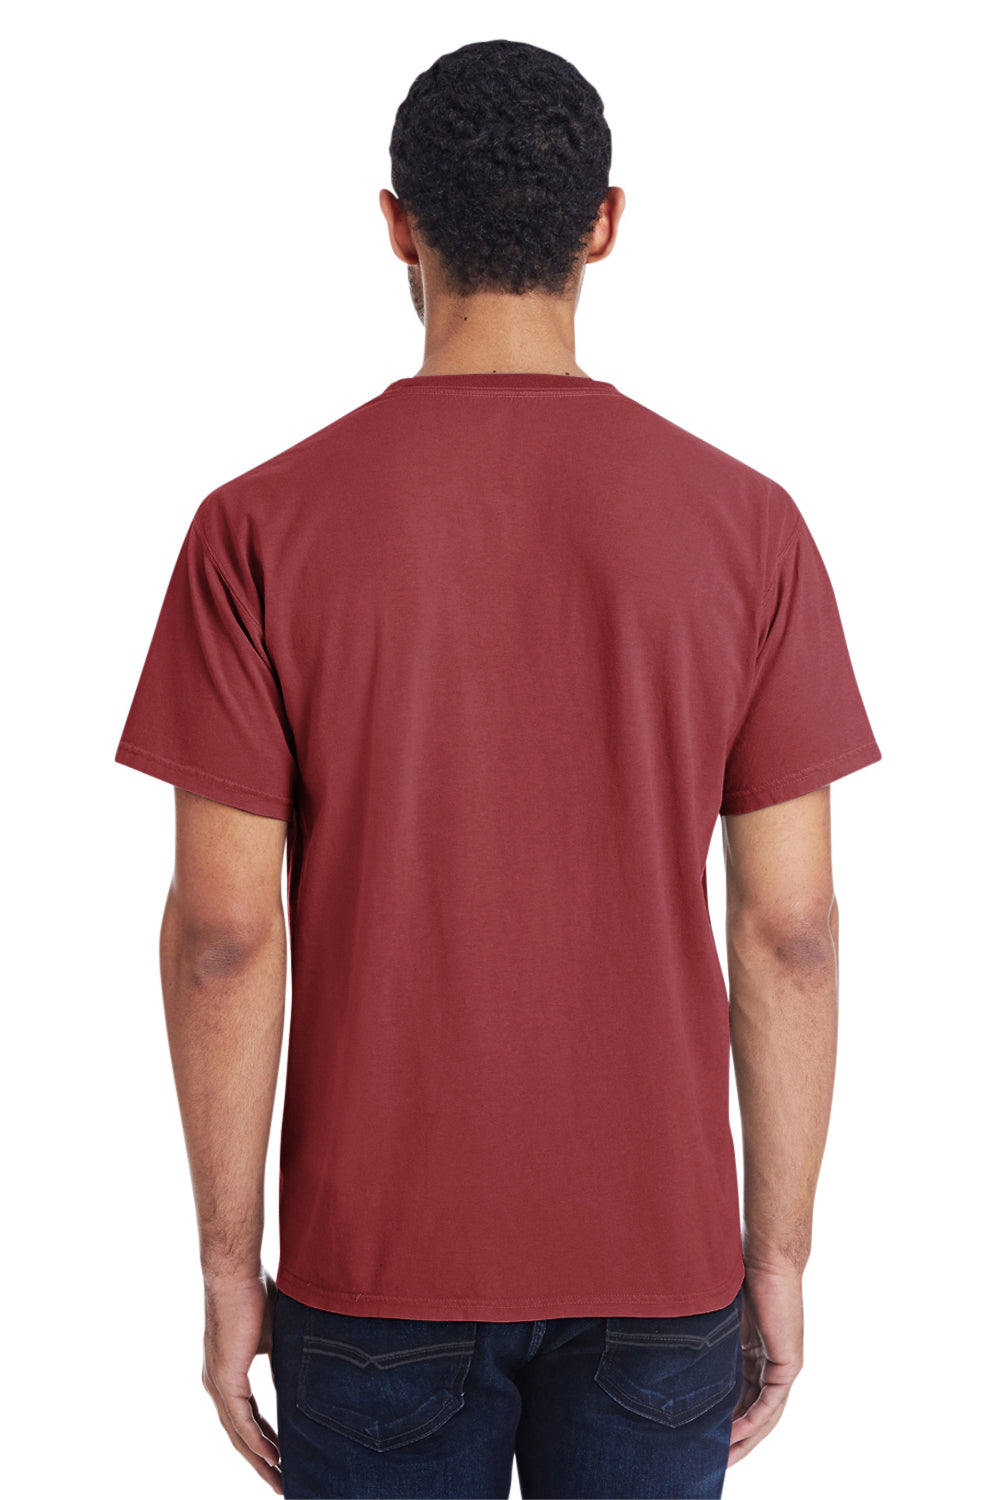 ComfortWash by Hanes GDH150 Short Sleeve Crewneck T-Shirt w/ Pocket Cayenne Red Back